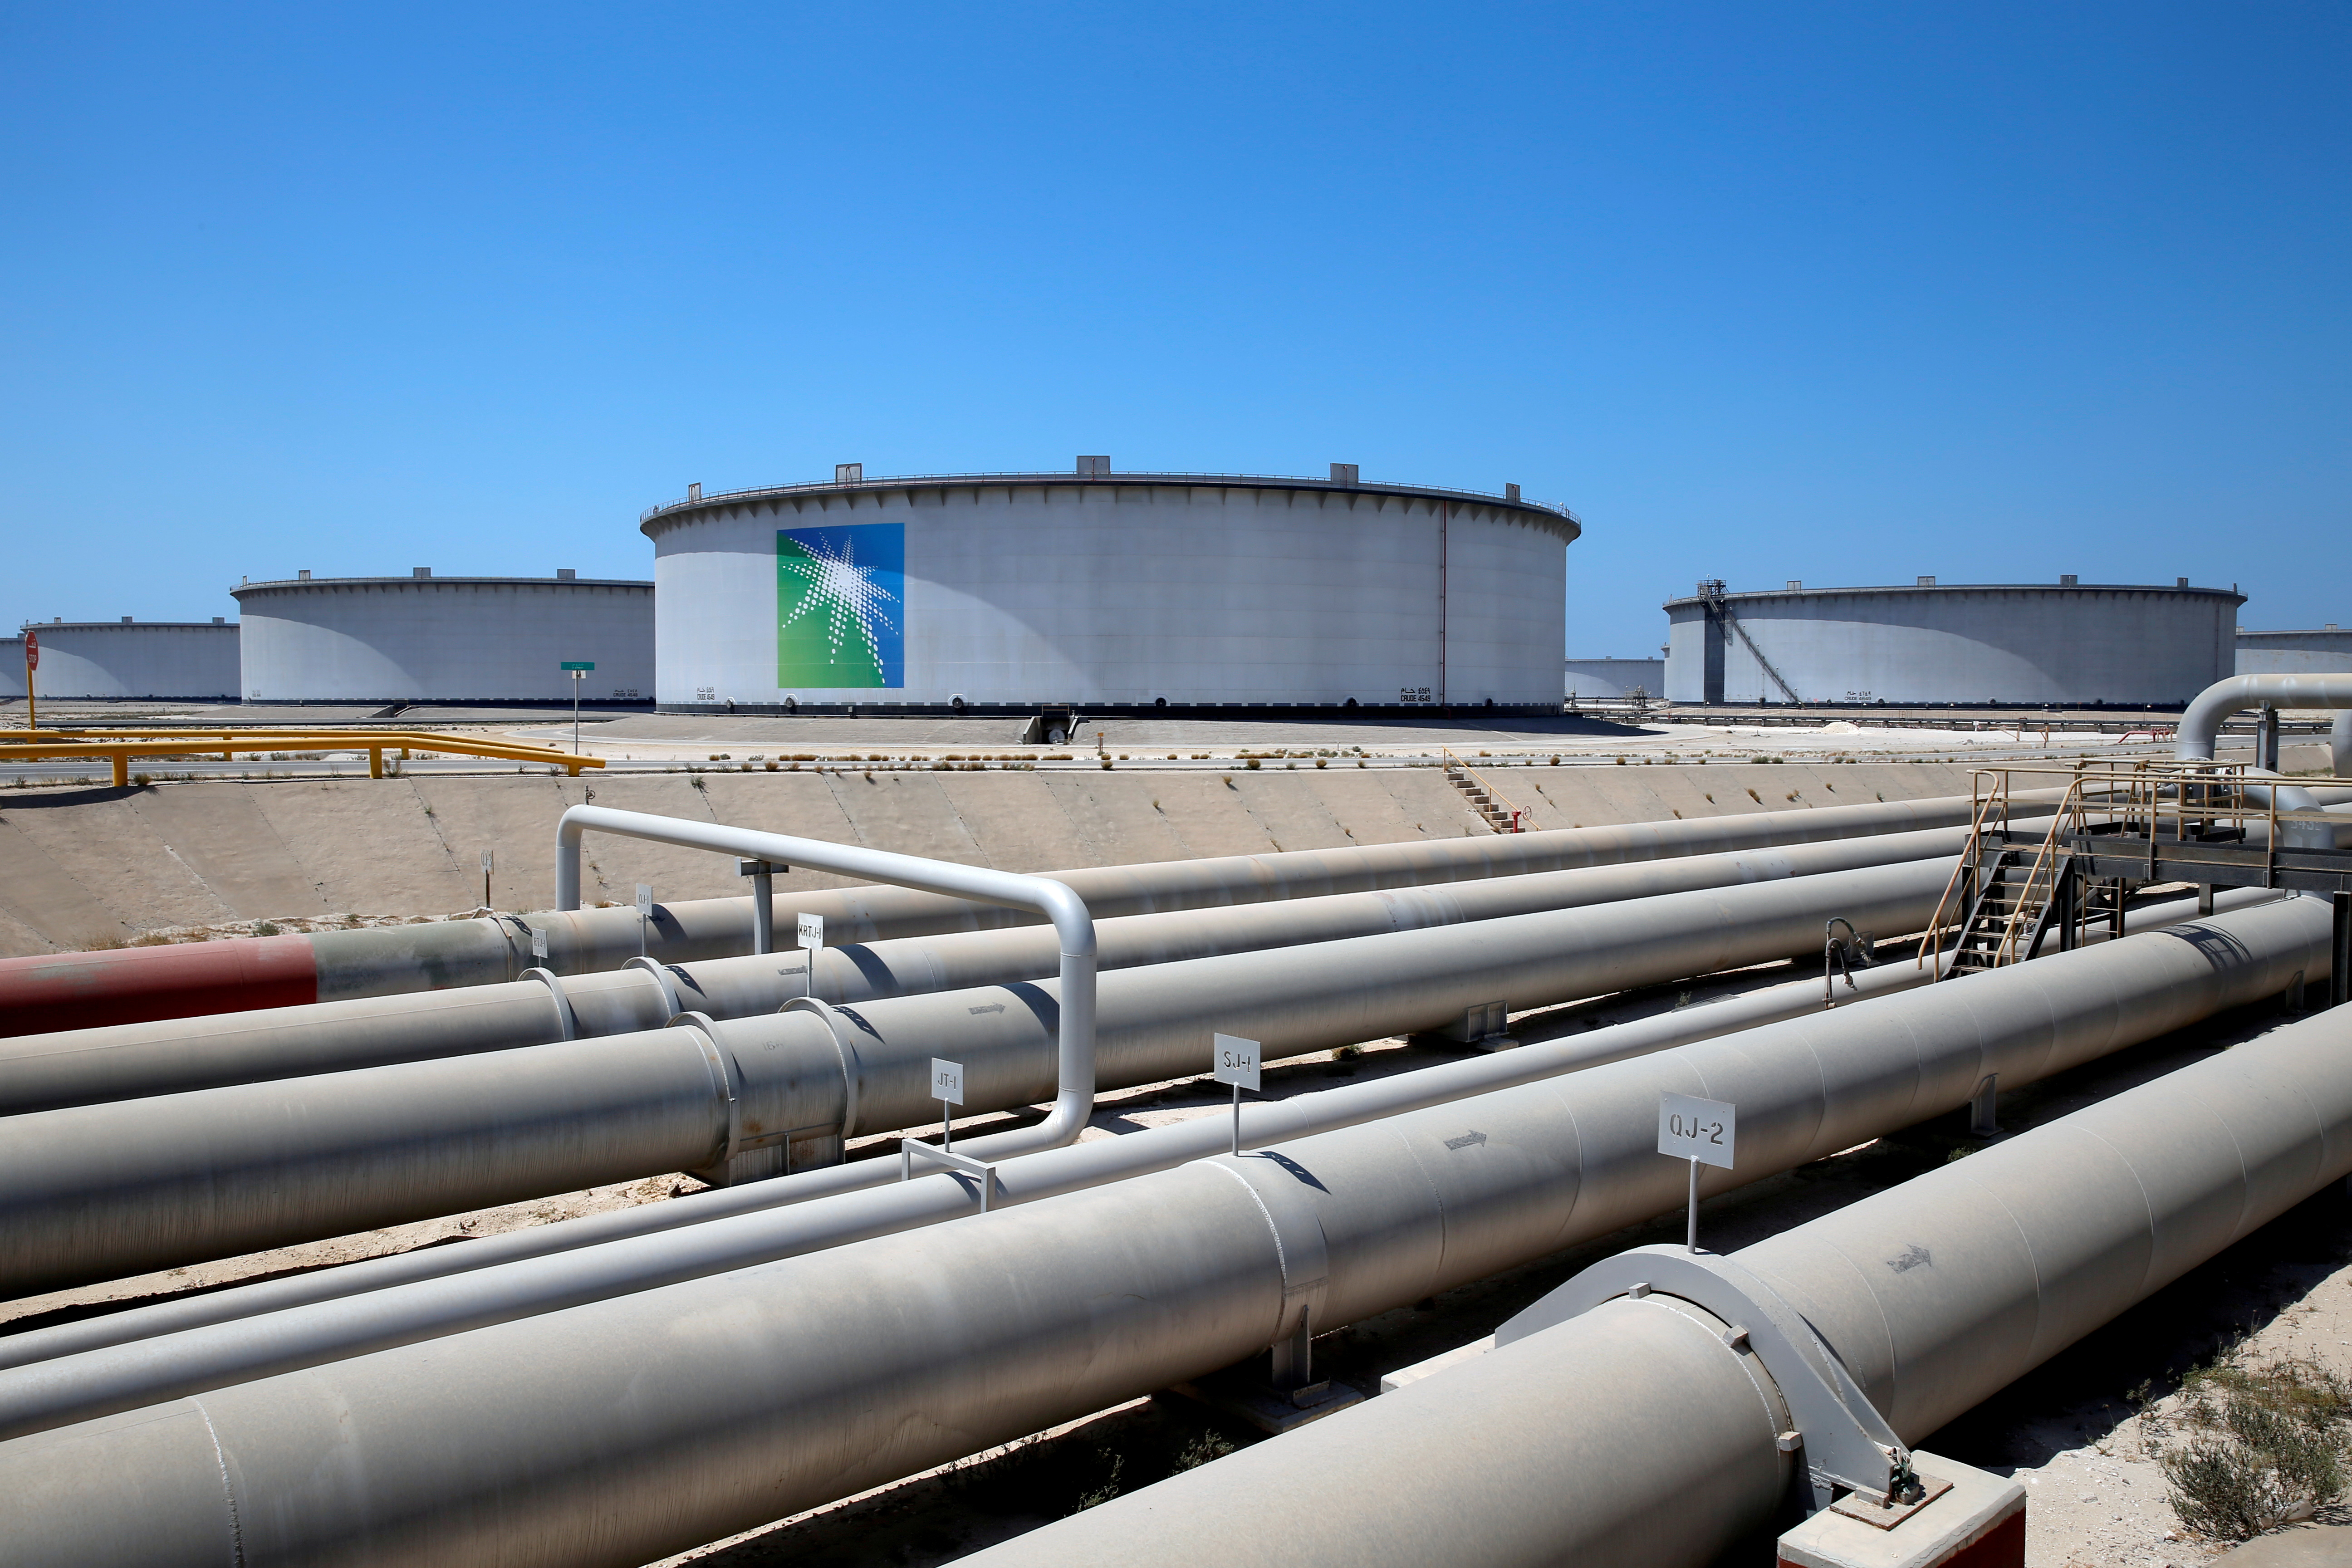 General view of Aramco tanks and oil pipe at Saudi Aramco's Ras Tanura oil refinery and oil terminal